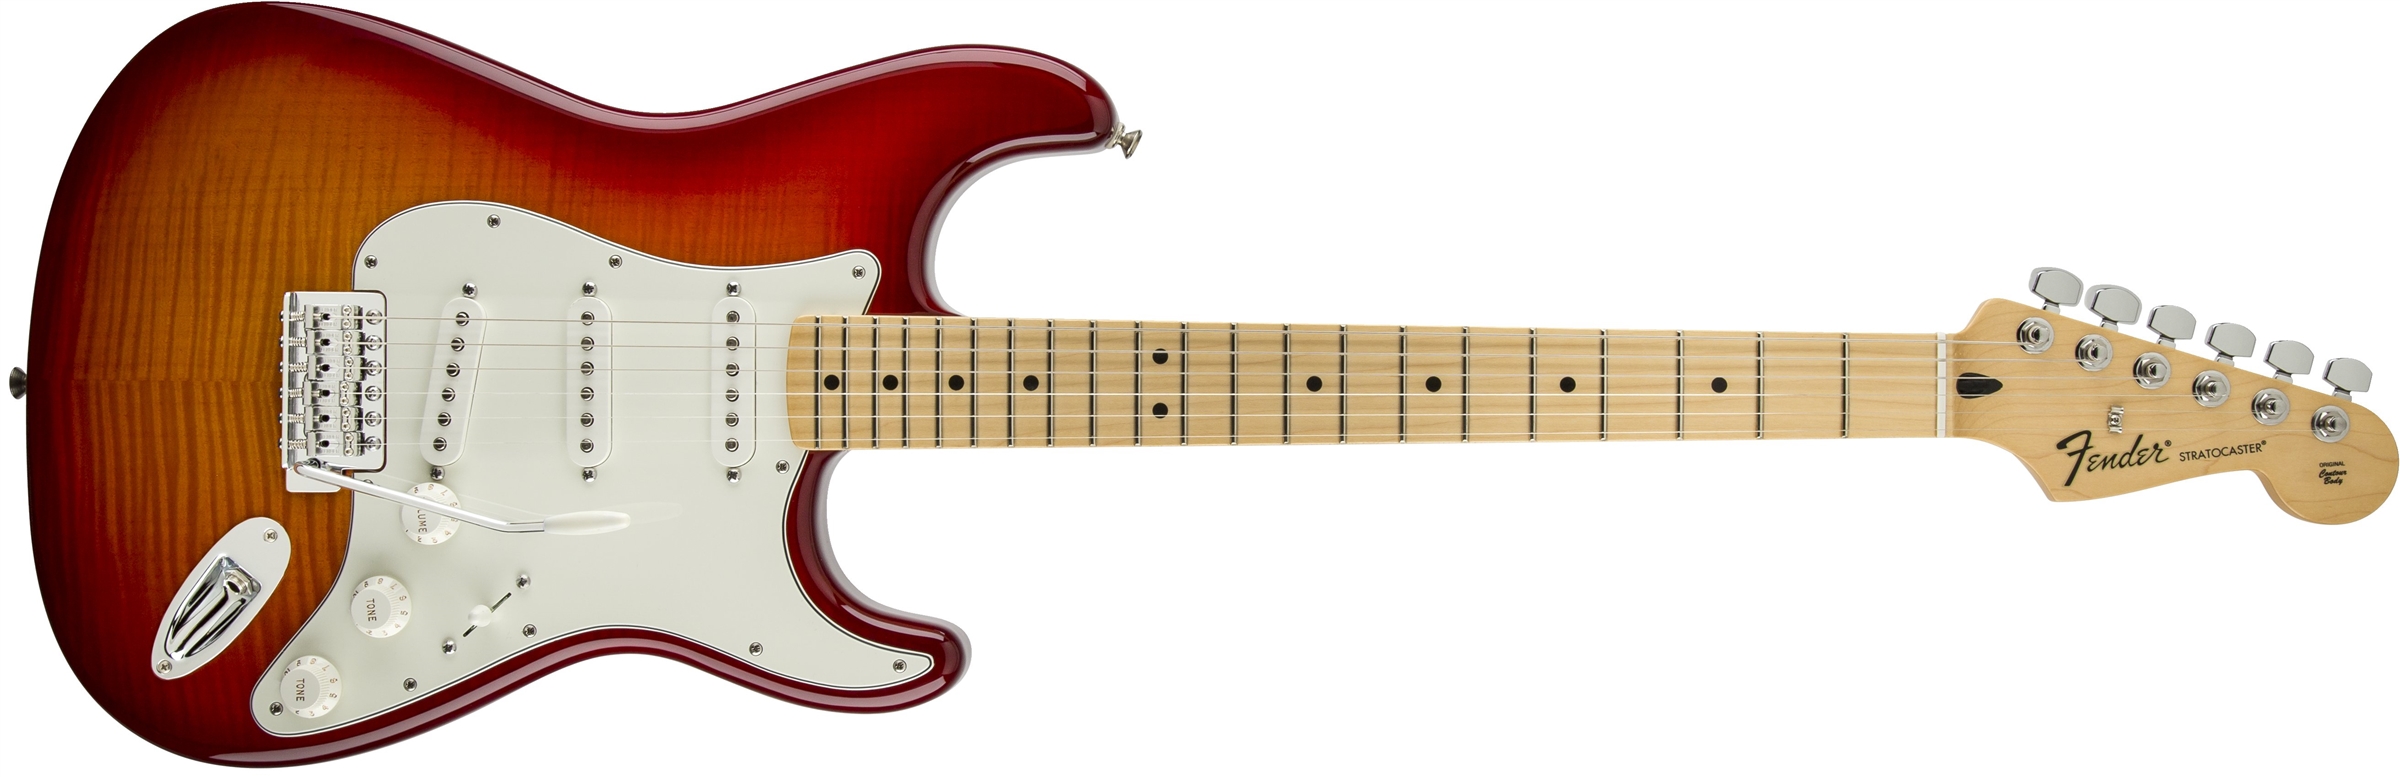 Fender Standard Stratocaster Plus Top Aged Cherry Burst Maple